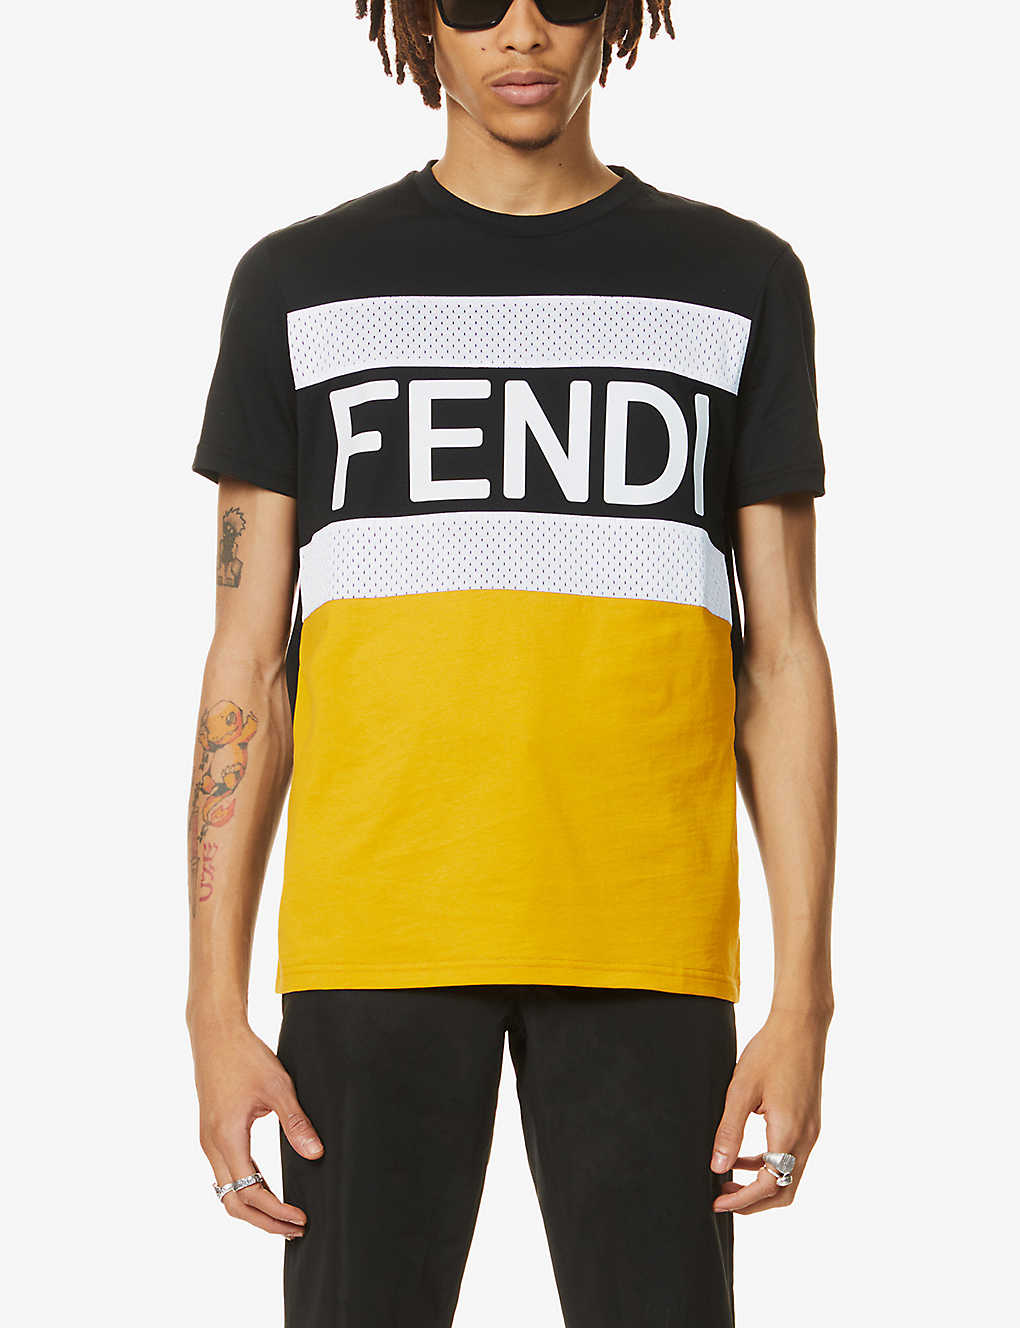 FENDI - FENDI Tシャツ ネイビー 新品未使用 タグ付き フェンディ